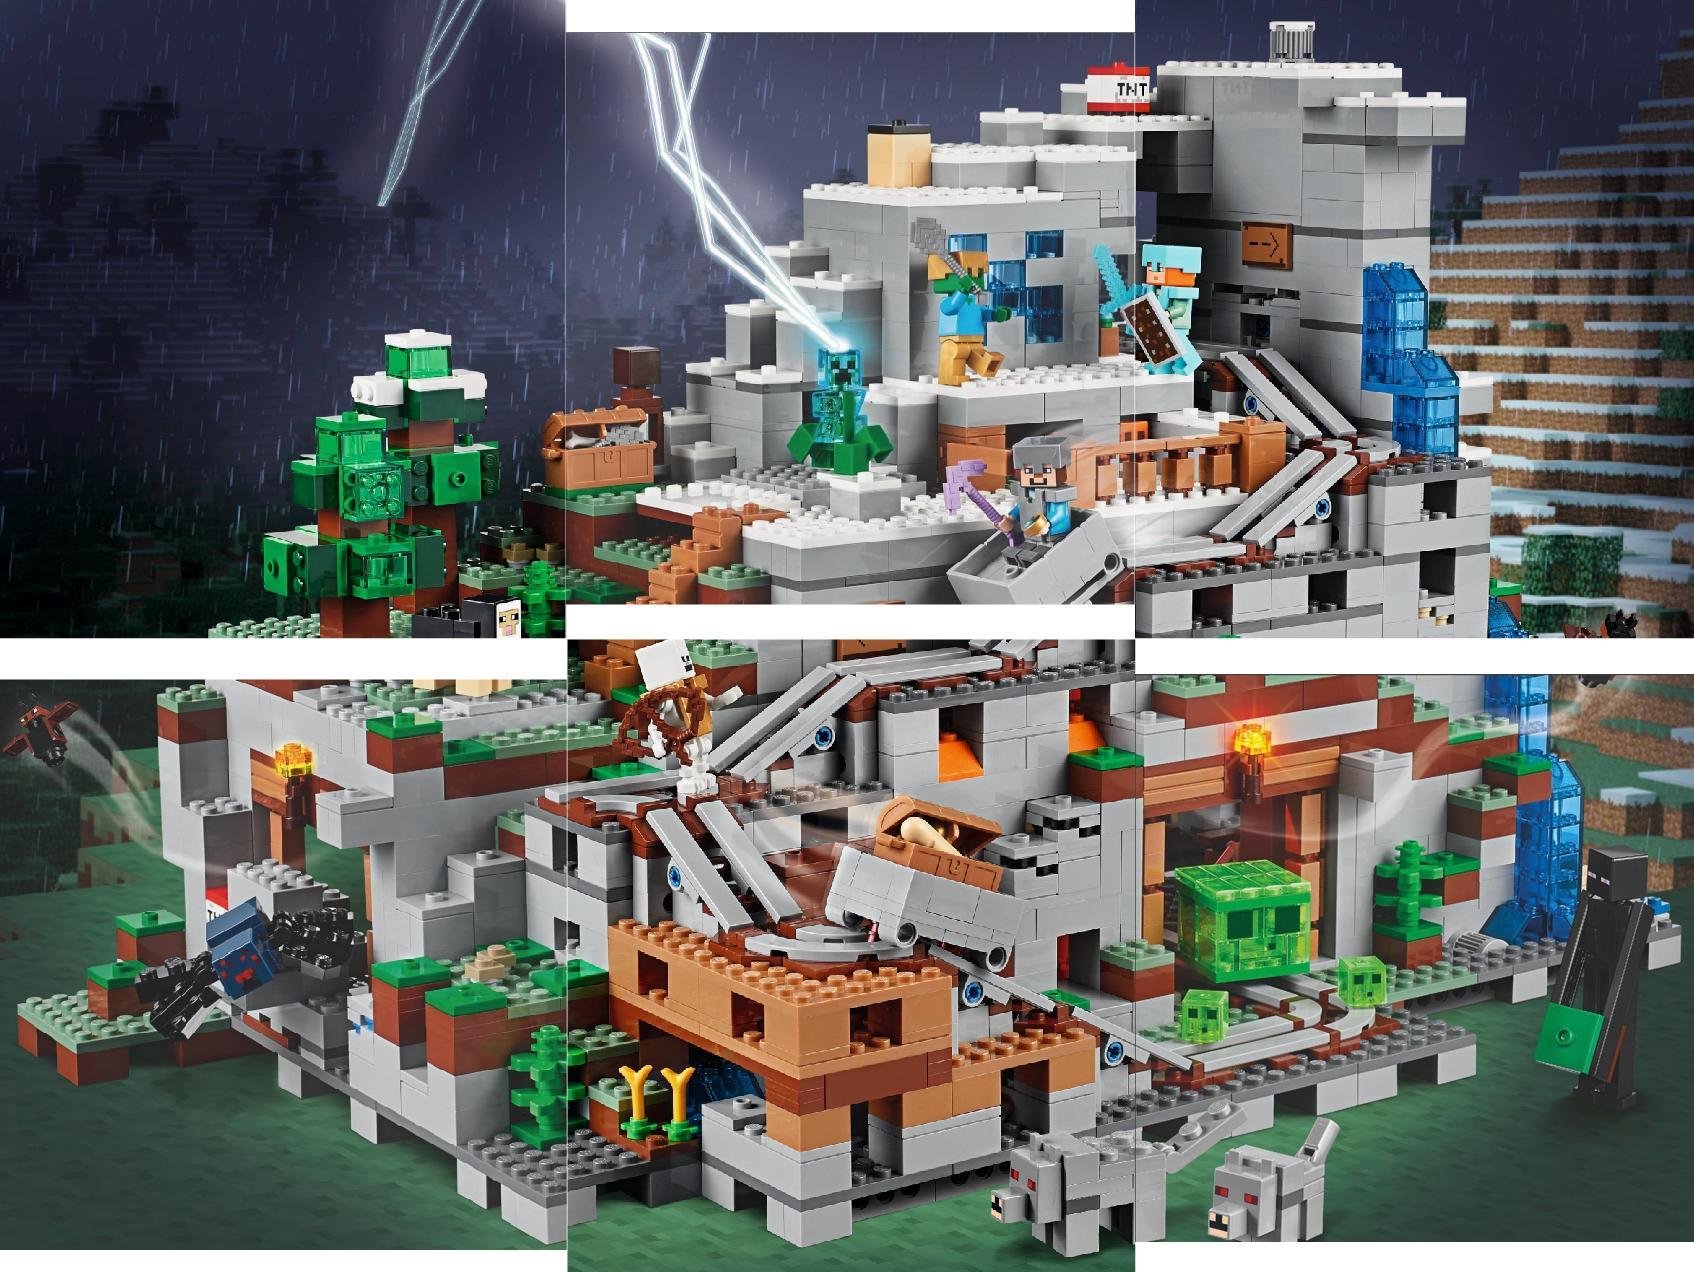 Minecraft 21137 The Mountain Cave revealed | LEGO set guide database